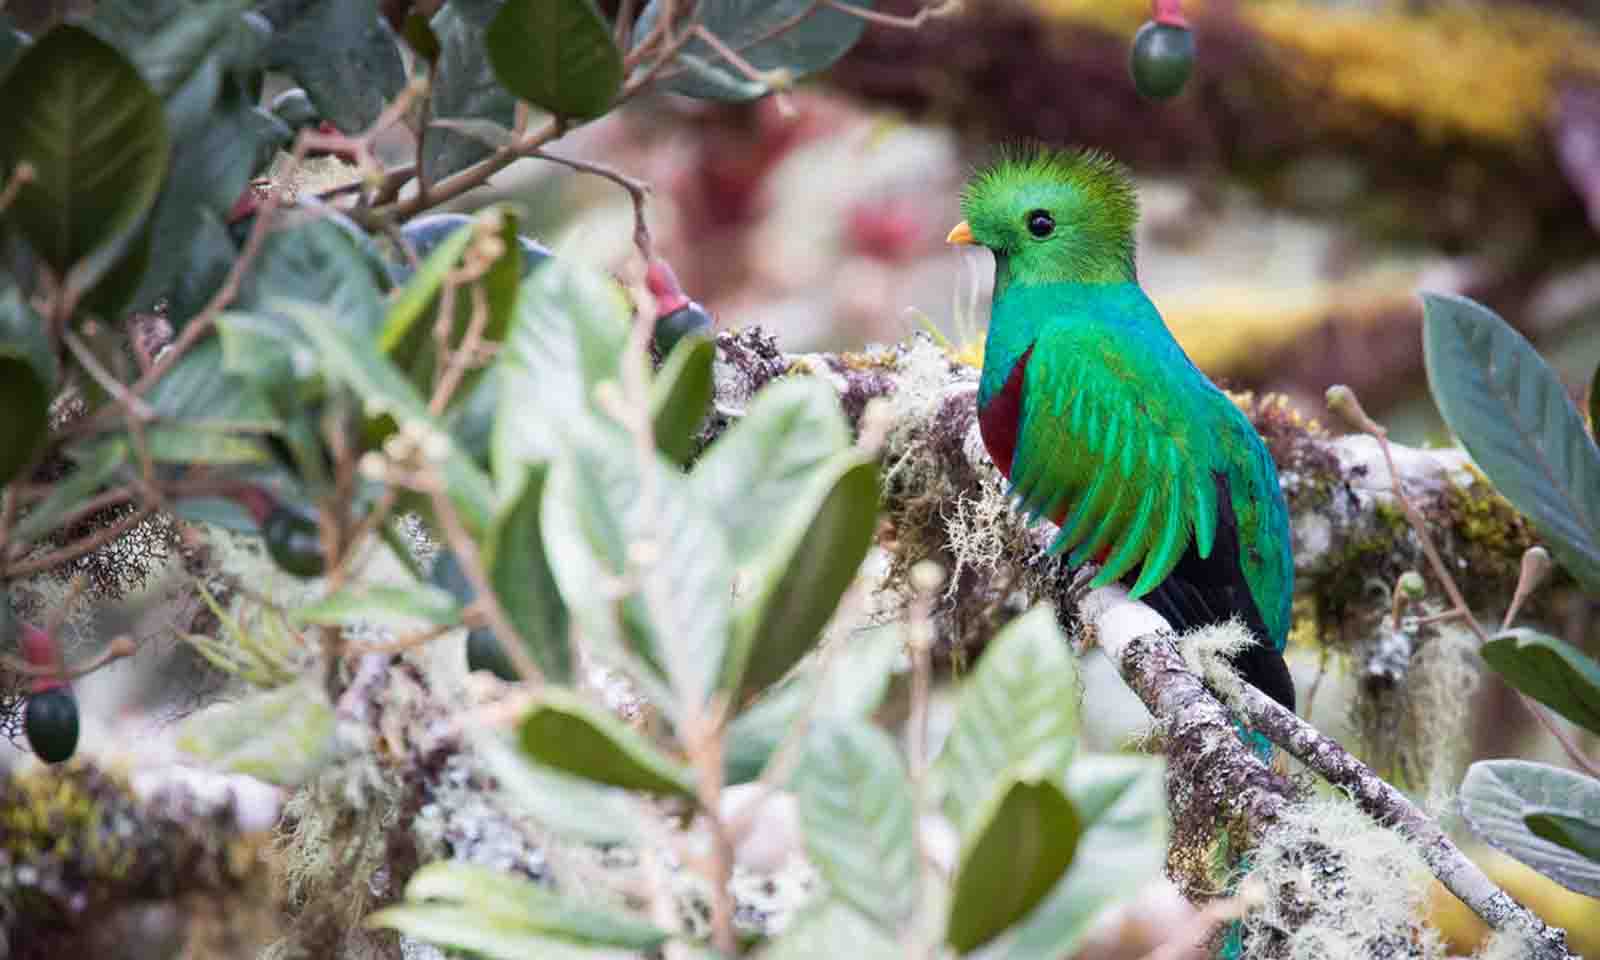 Resplendent quetzal (Pharomachrus mocinno) in the Quetzales National Park in Costa Rica